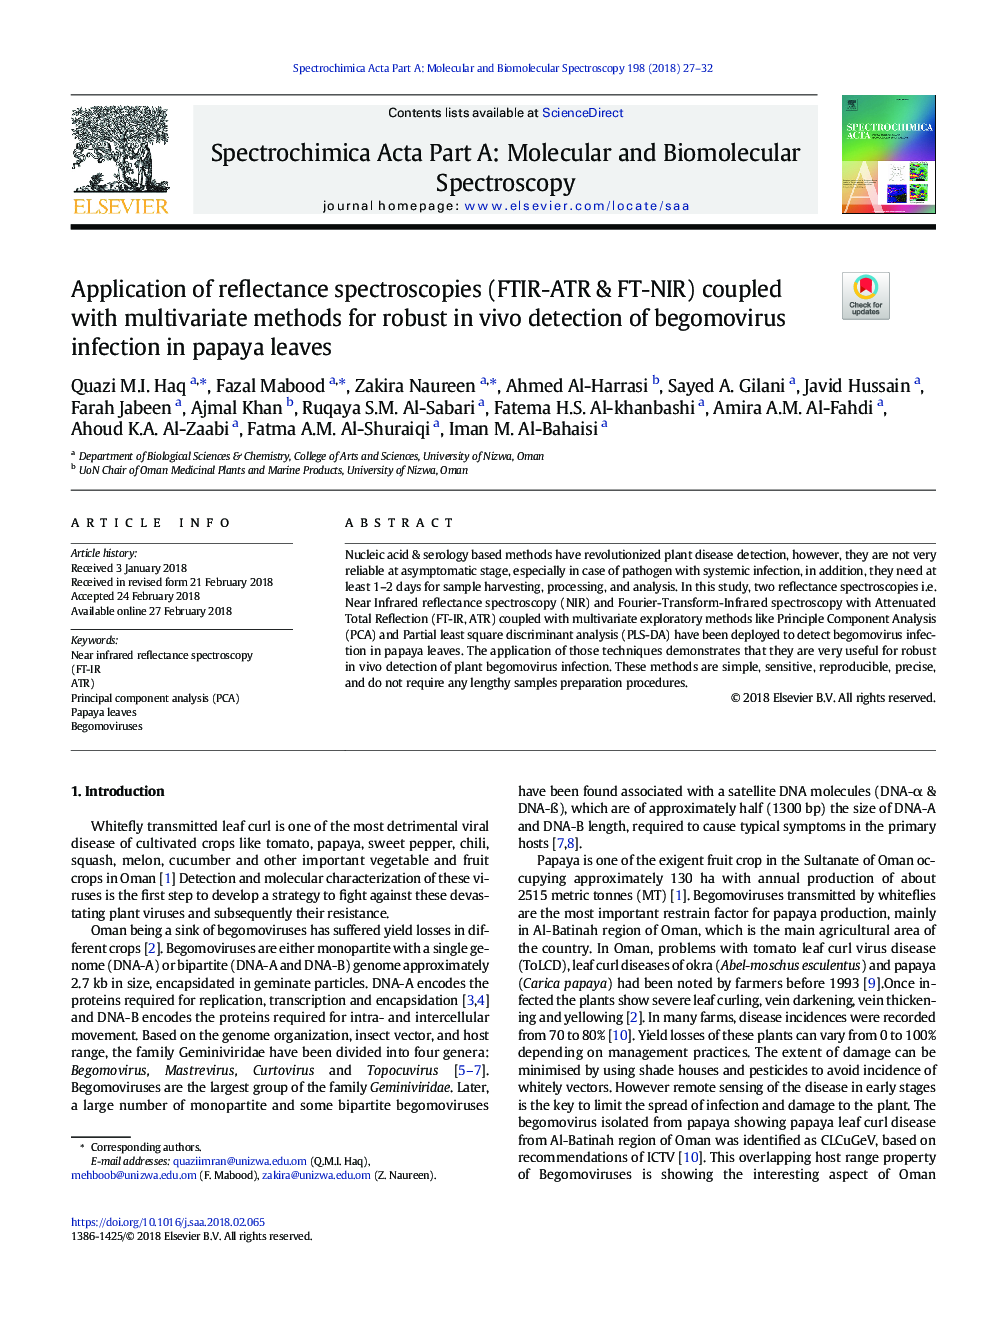 Application of reflectance spectroscopies (FTIR-ATR & FT-NIR) coupled with multivariate methods for robust in vivo detection of begomovirus infection in papaya leaves